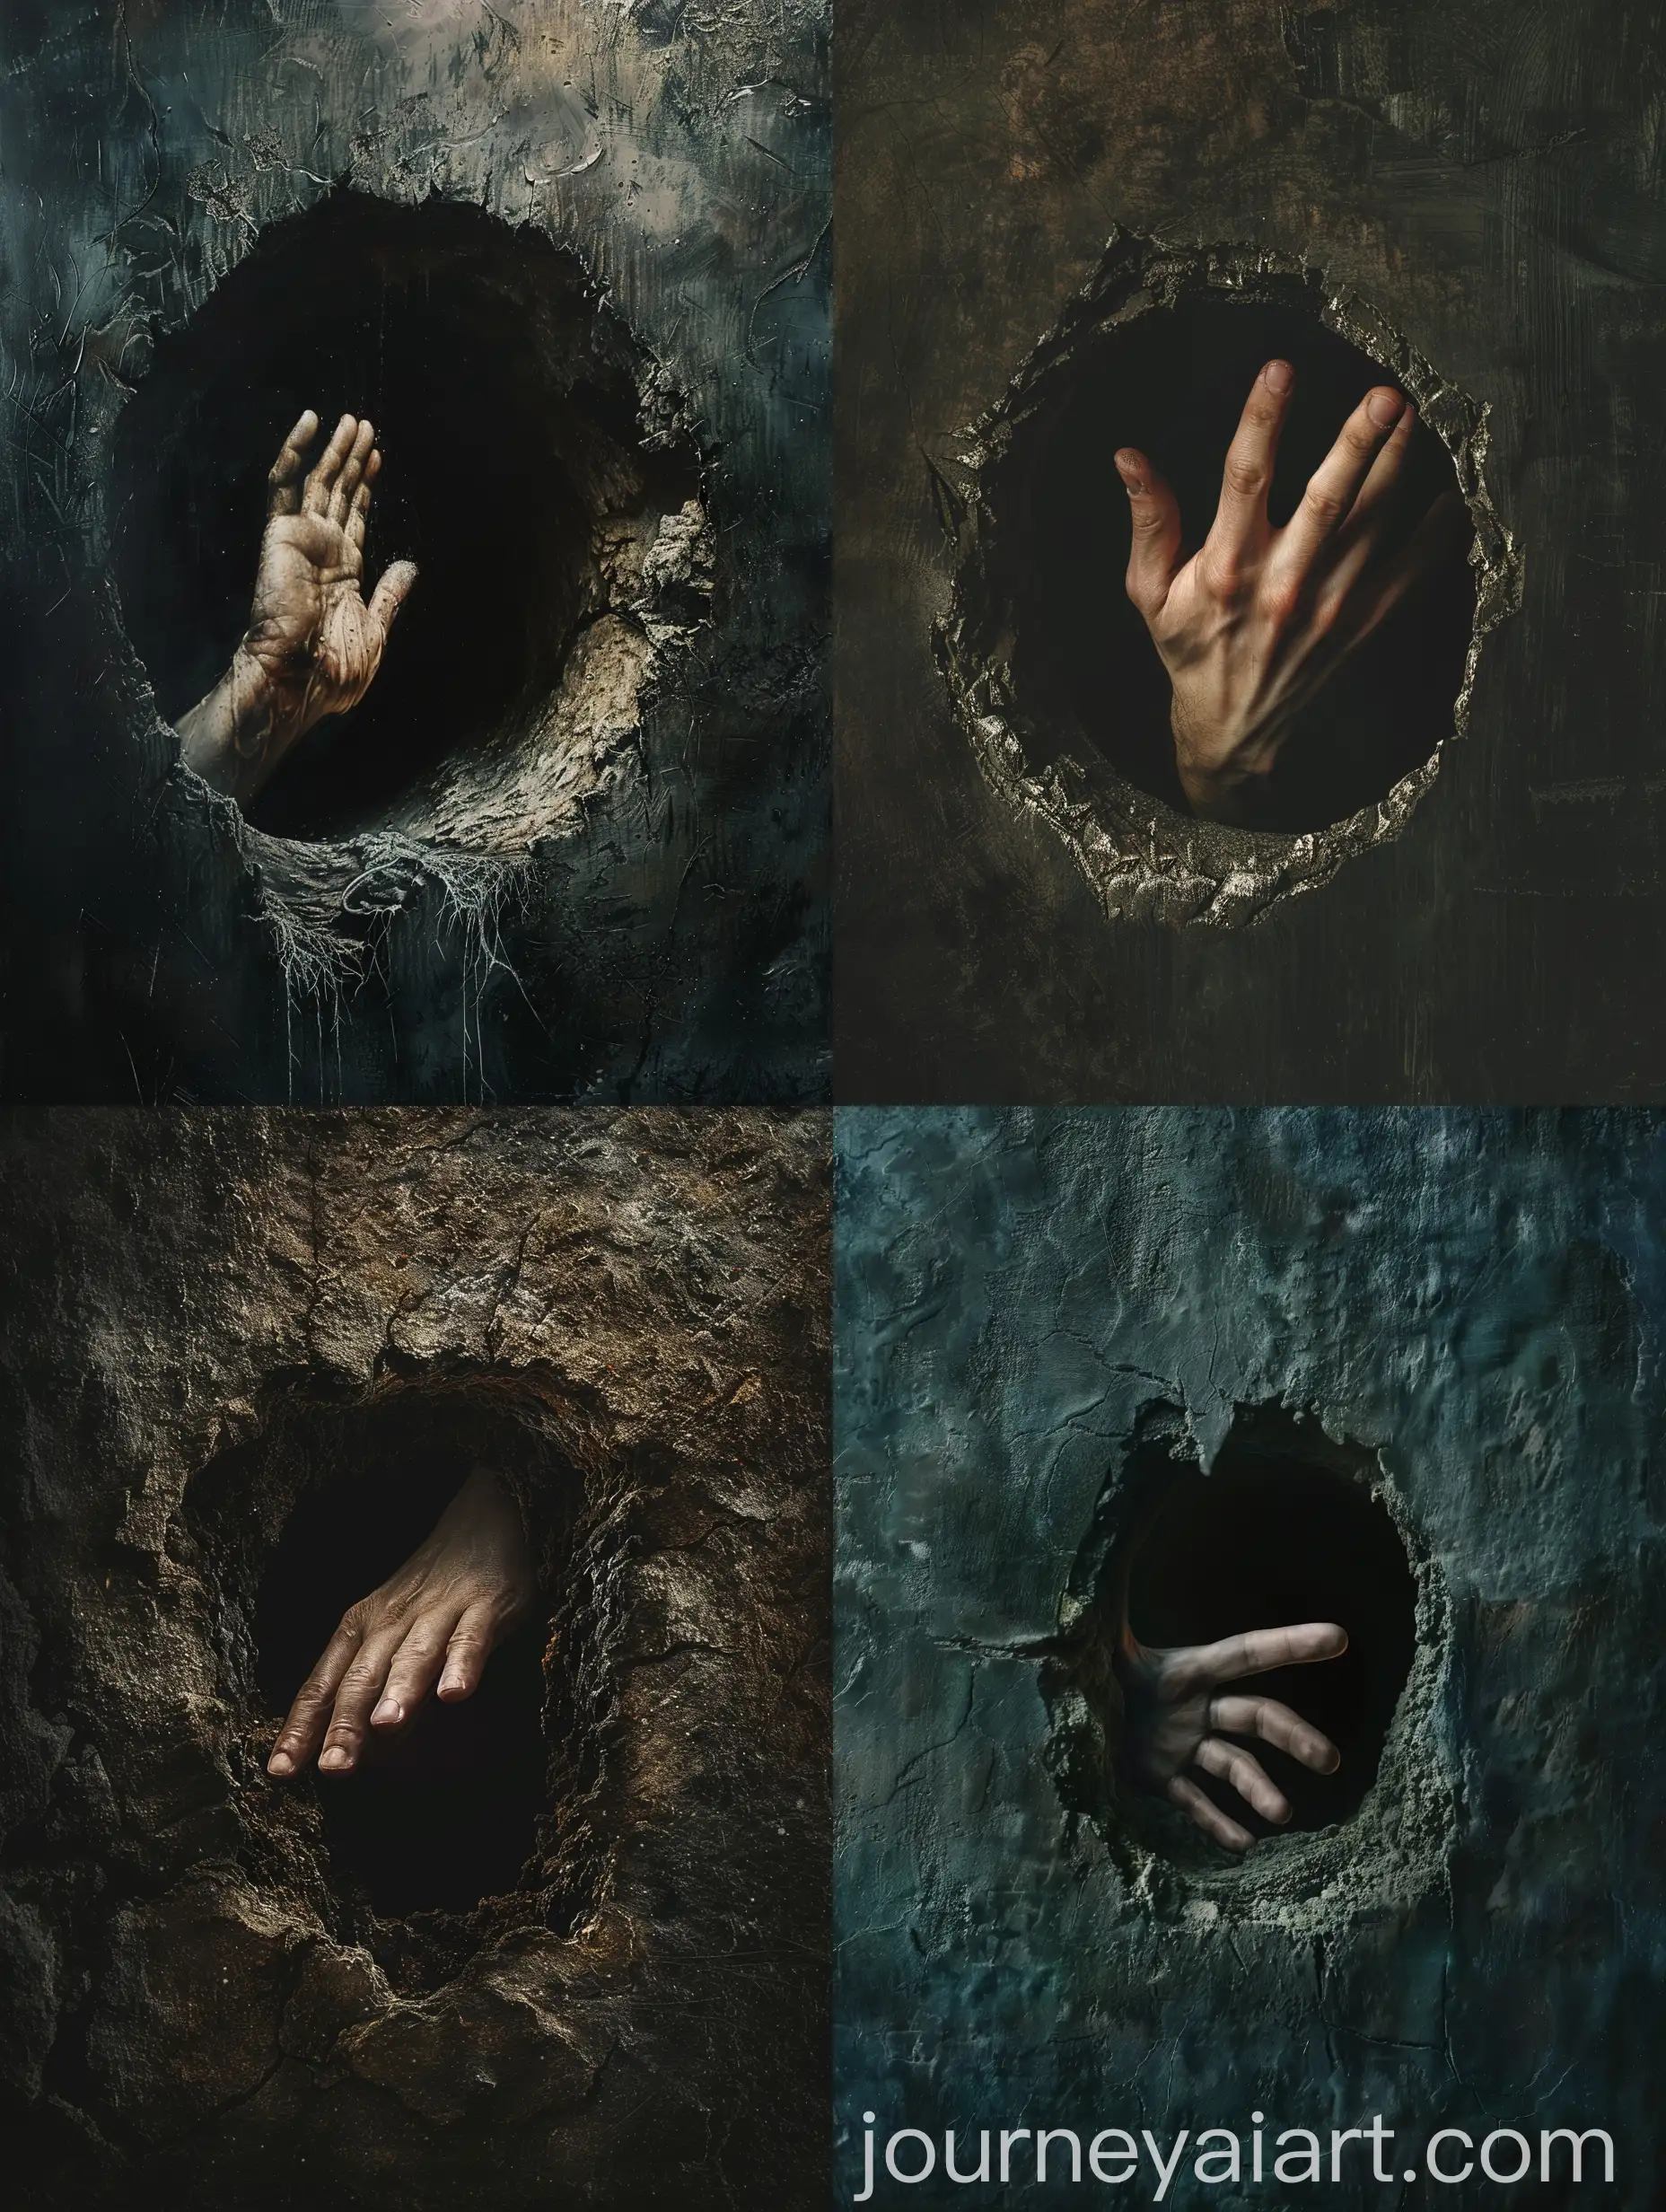 Hand-Entering-Dark-Realist-Style-Small-Hole